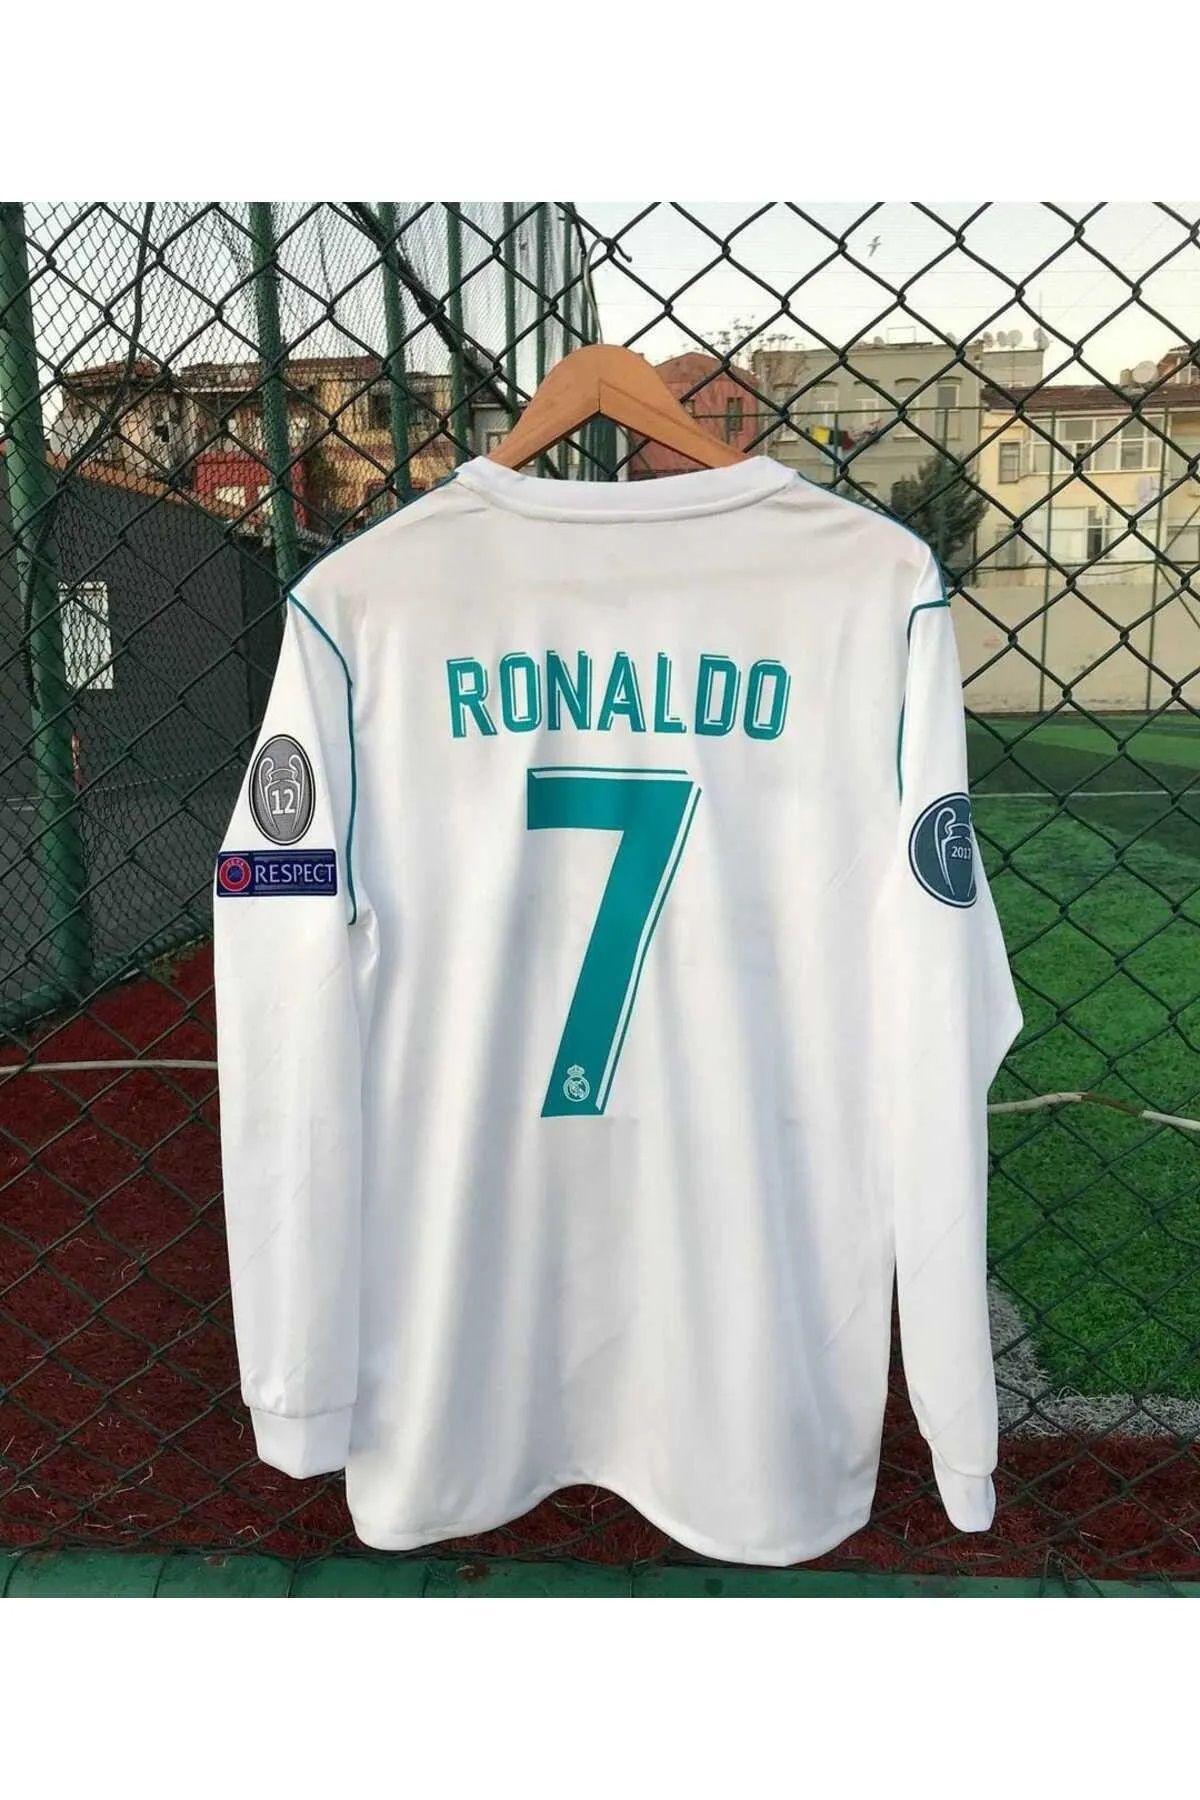 ZİLONG Real Madrid 2018 Kiev Şampiyonlar Ligi Finali Cristiano Ronaldo Yetişkin Forması